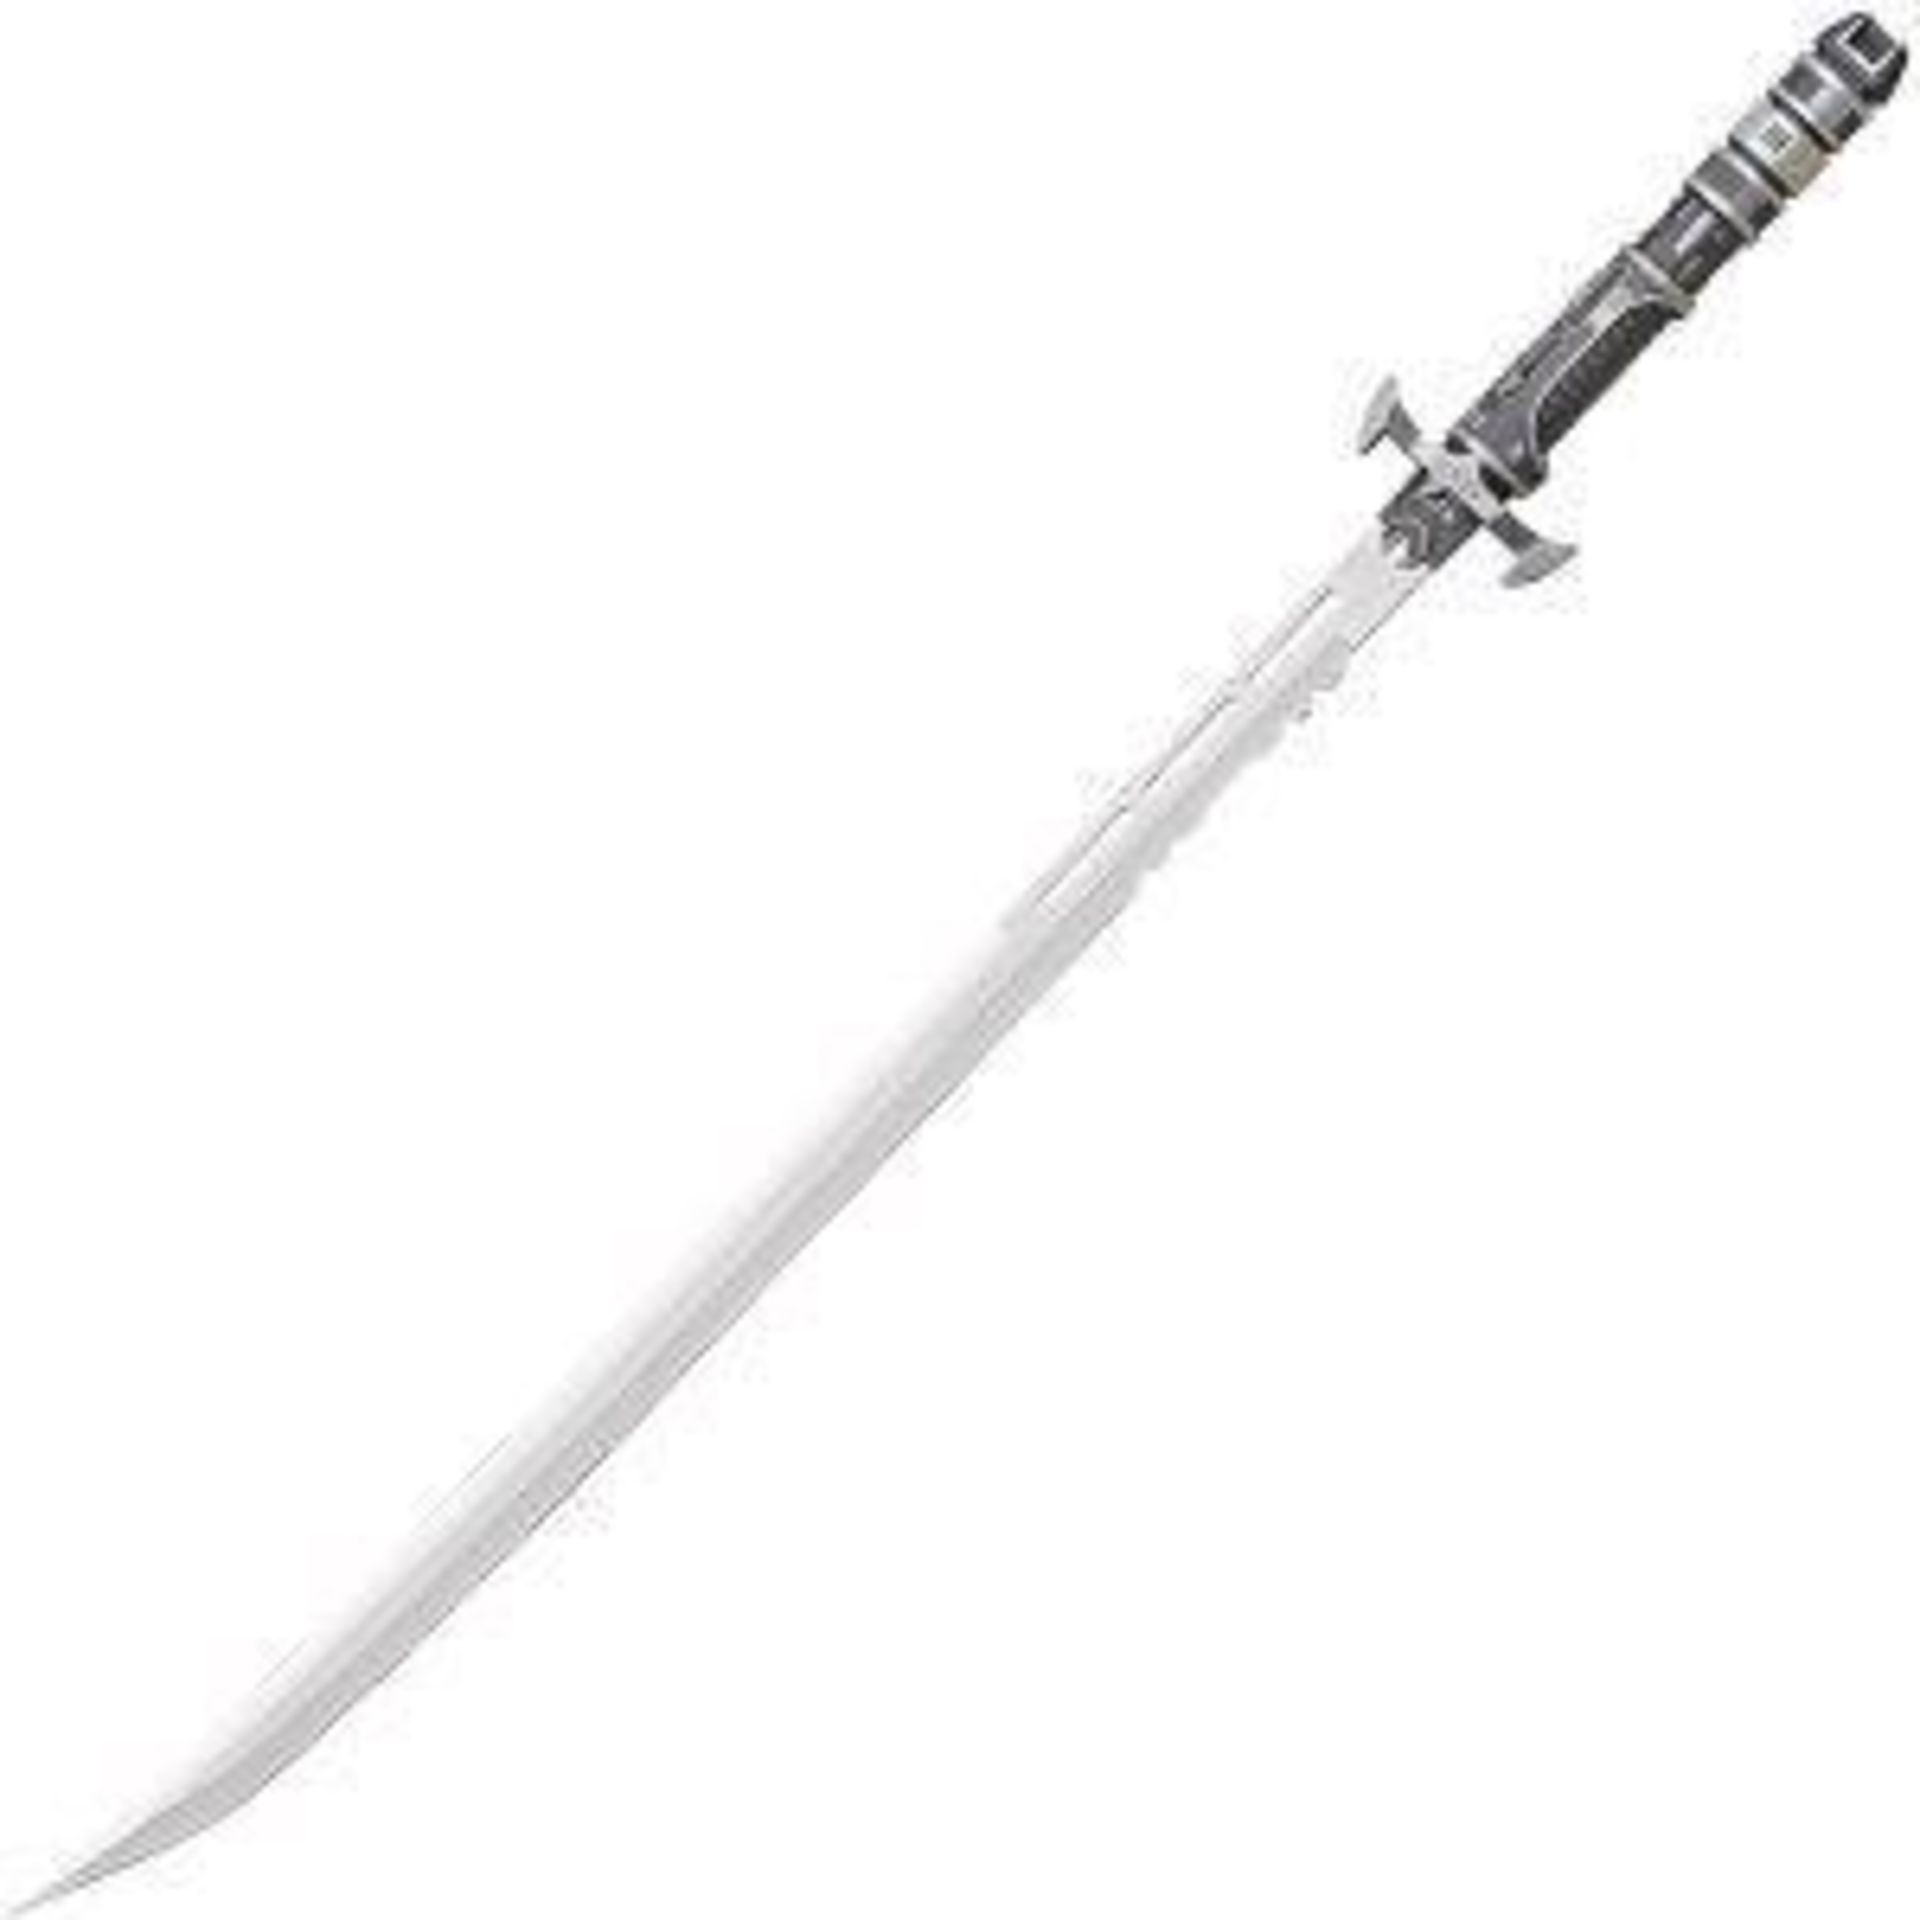 Short Description Samurai 3000 Katana Sword, Brushed Satin Finish w/Scabbard  Long Description The